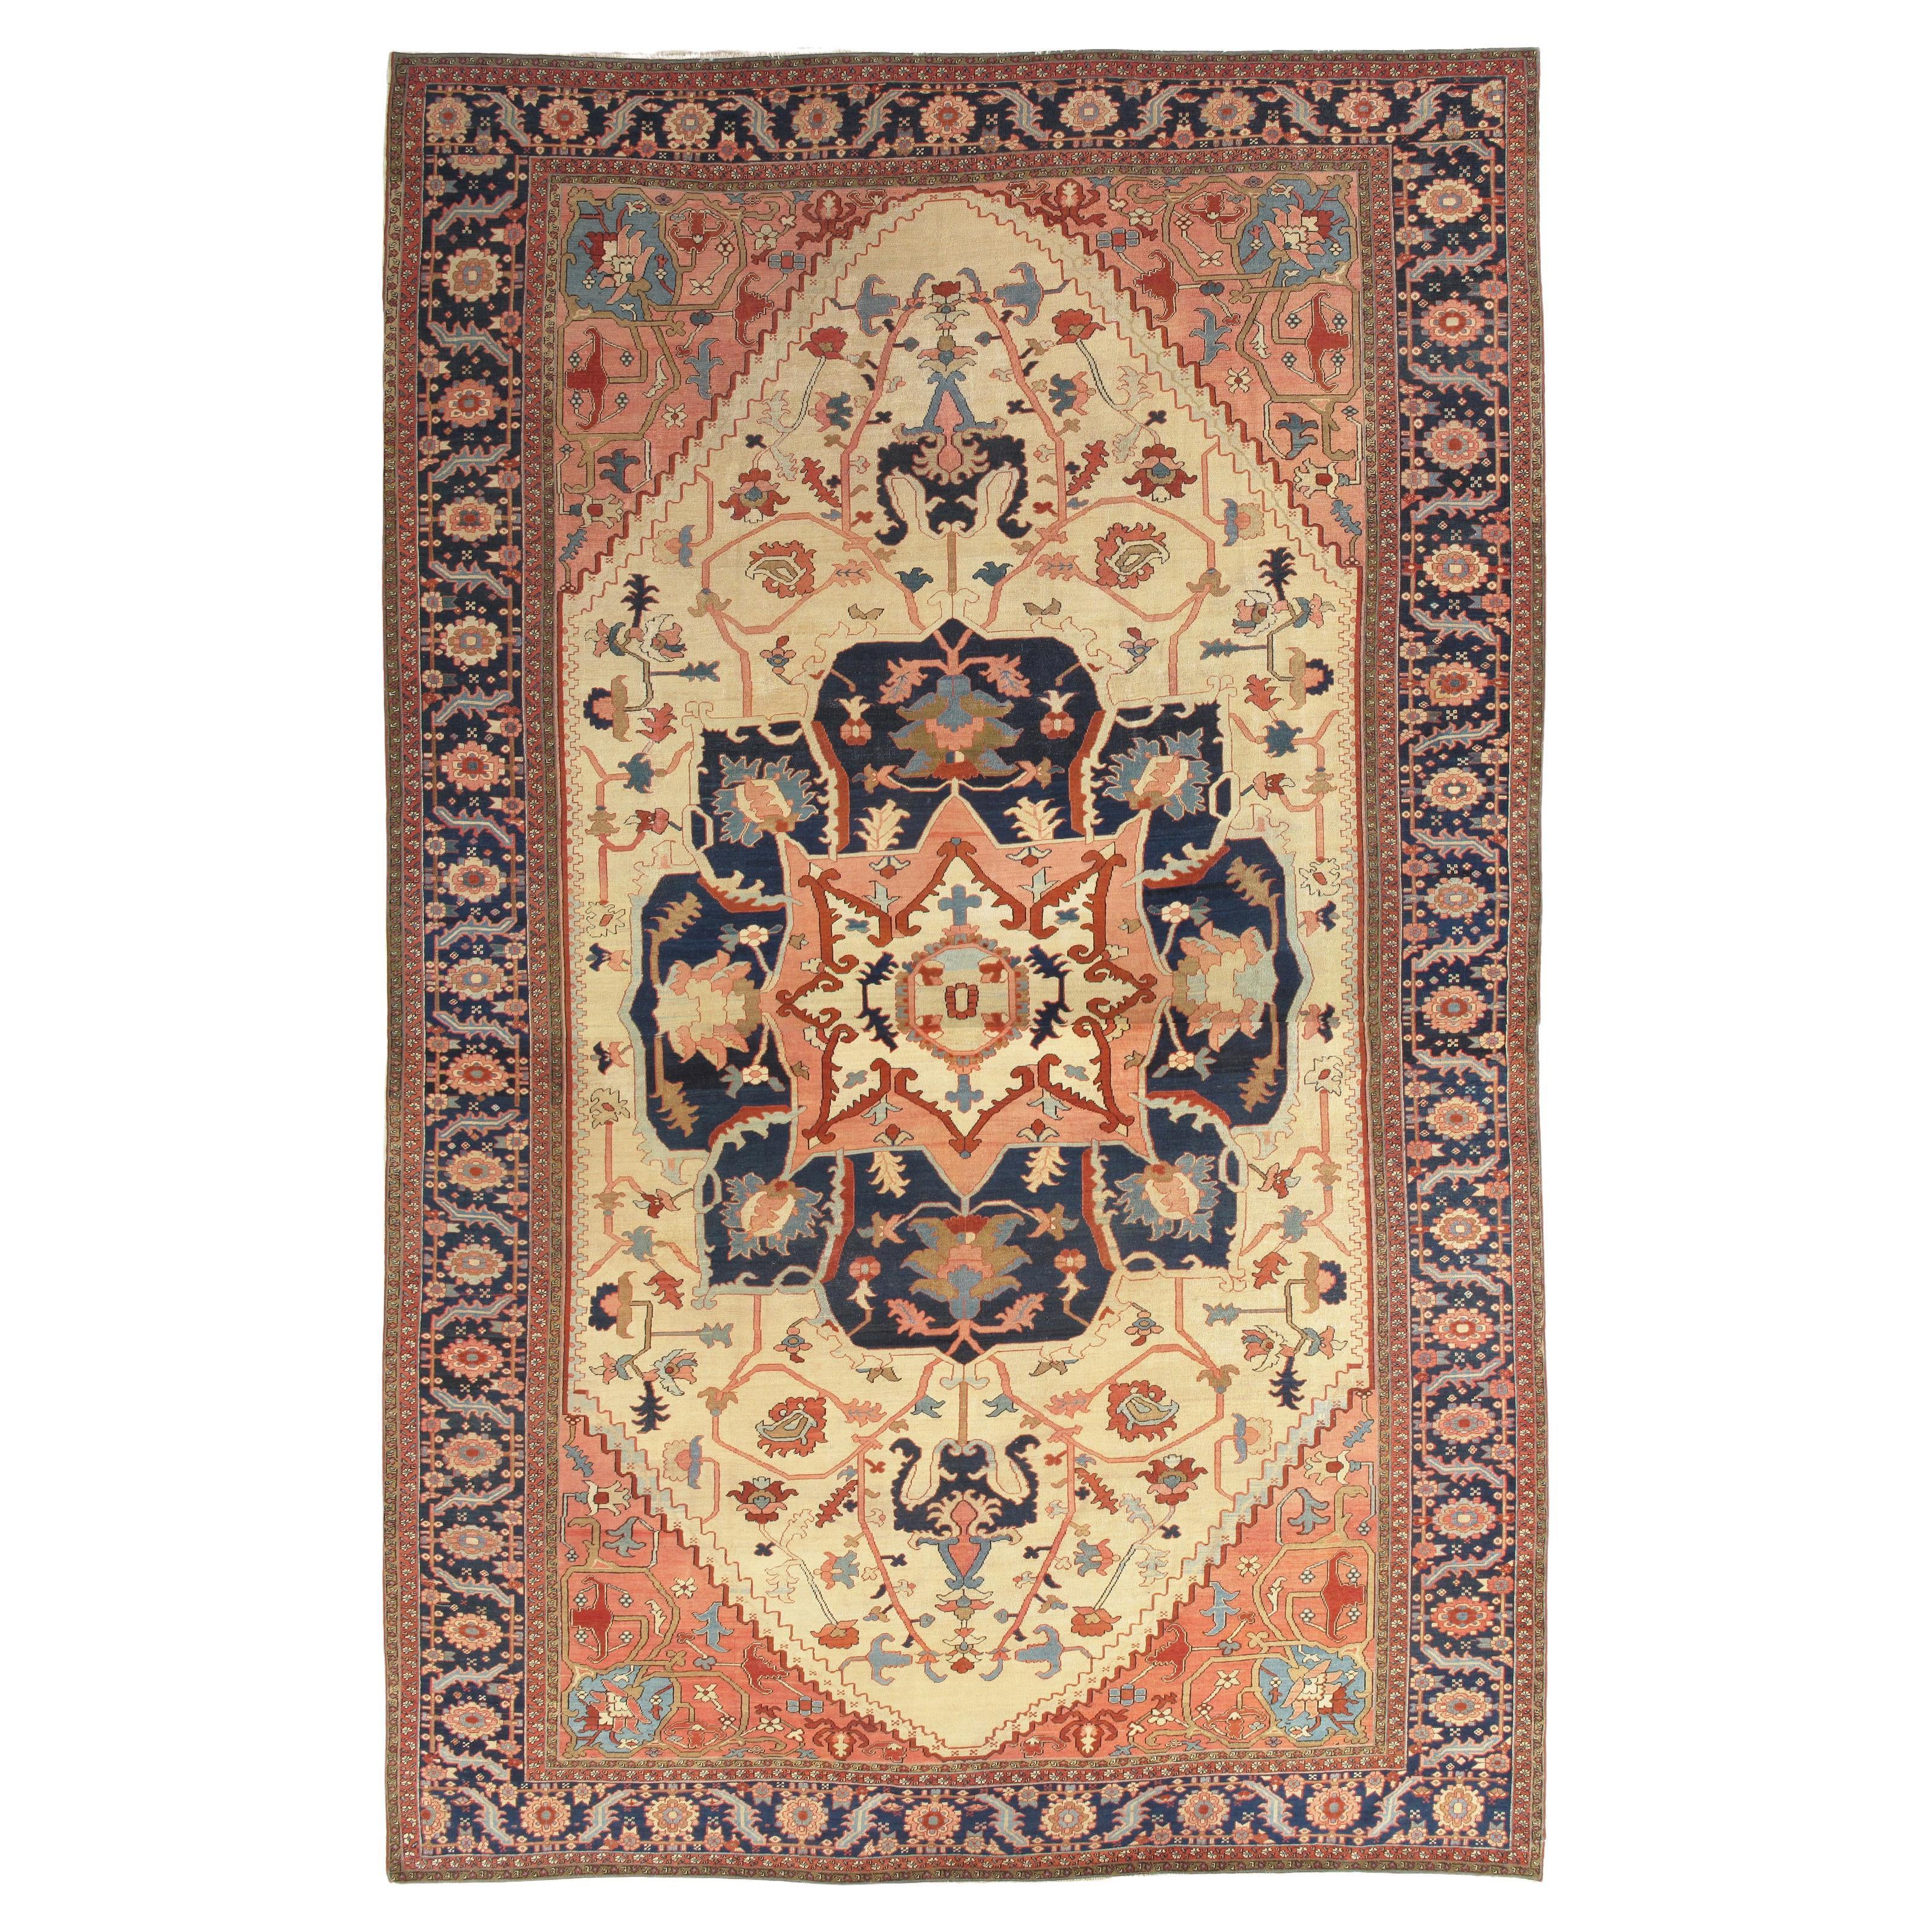 Antique Persian Serapi Carpet, Handmade Wool Oriental Rug, Ivory and Light Blue For Sale